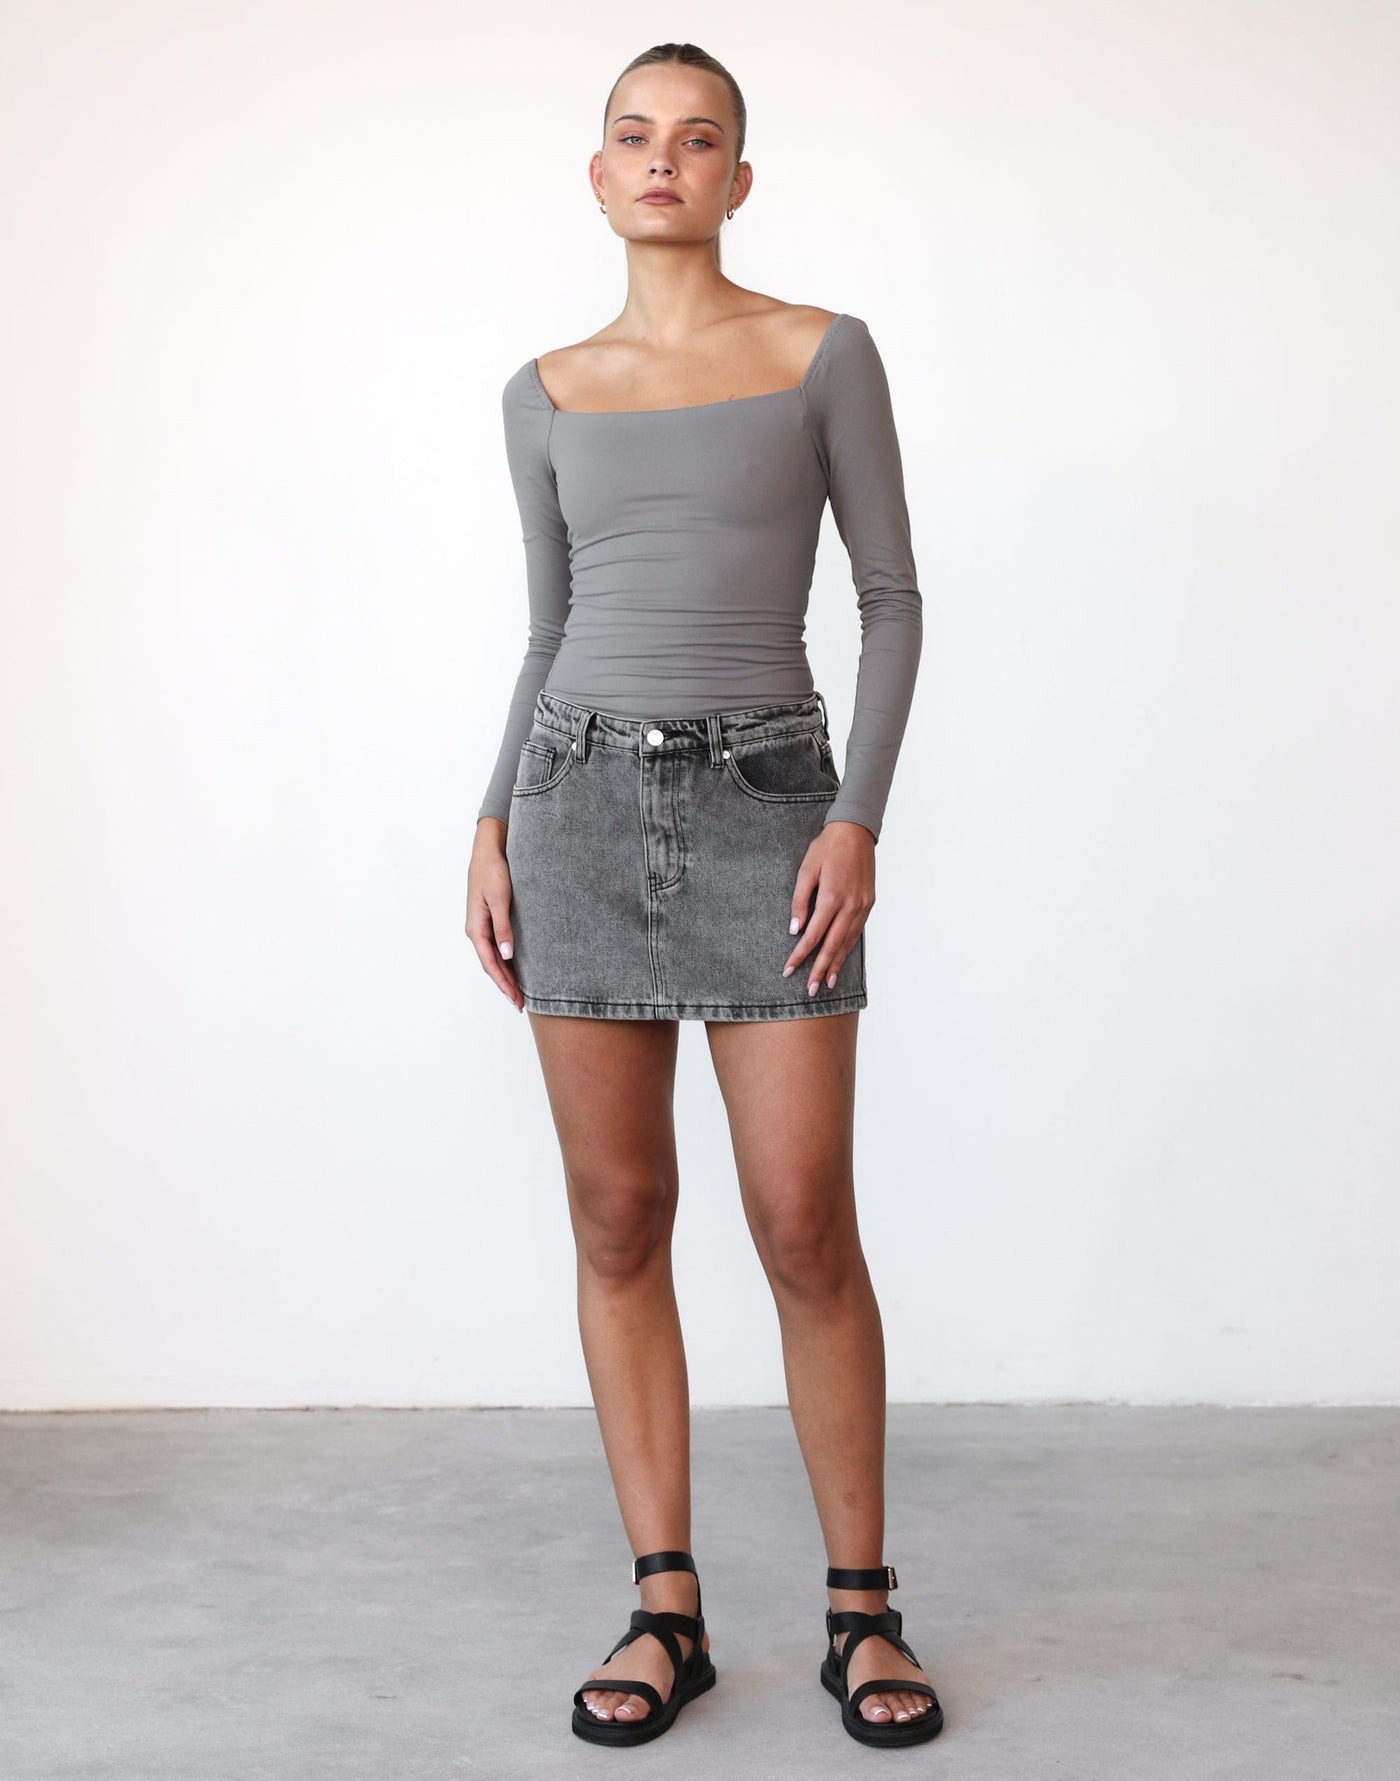 Monae Long Sleeve Bodysuit (Grey) - Low Back Longsleeve Bodycon Bodysuit - Women's Top - Charcoal Clothing